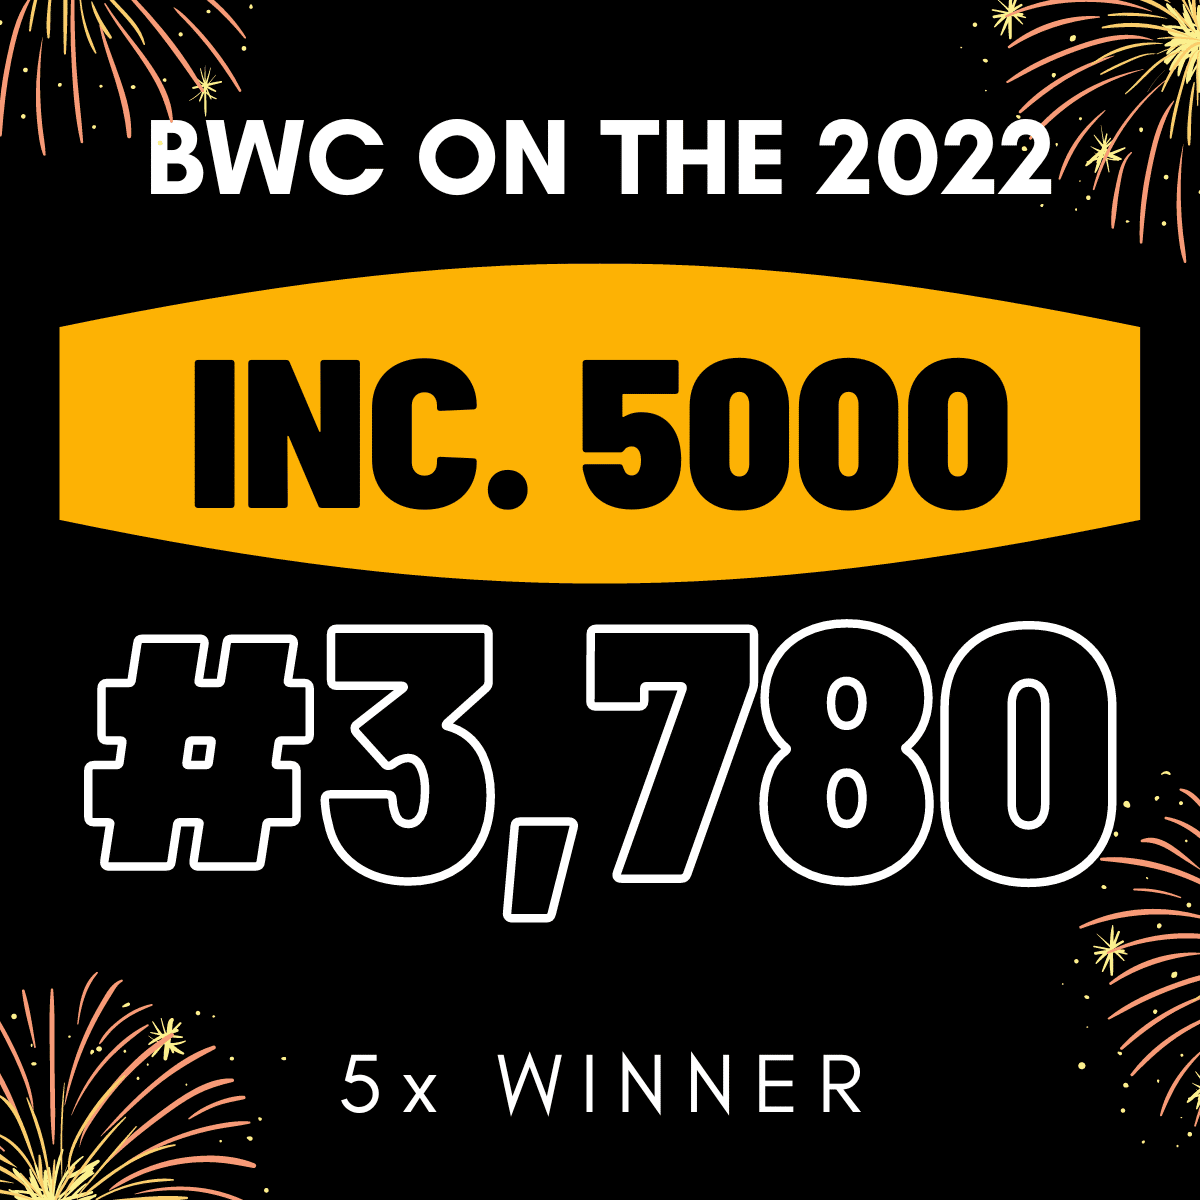 BWC Ranks #3,780 on the 2022 Inc. 5000